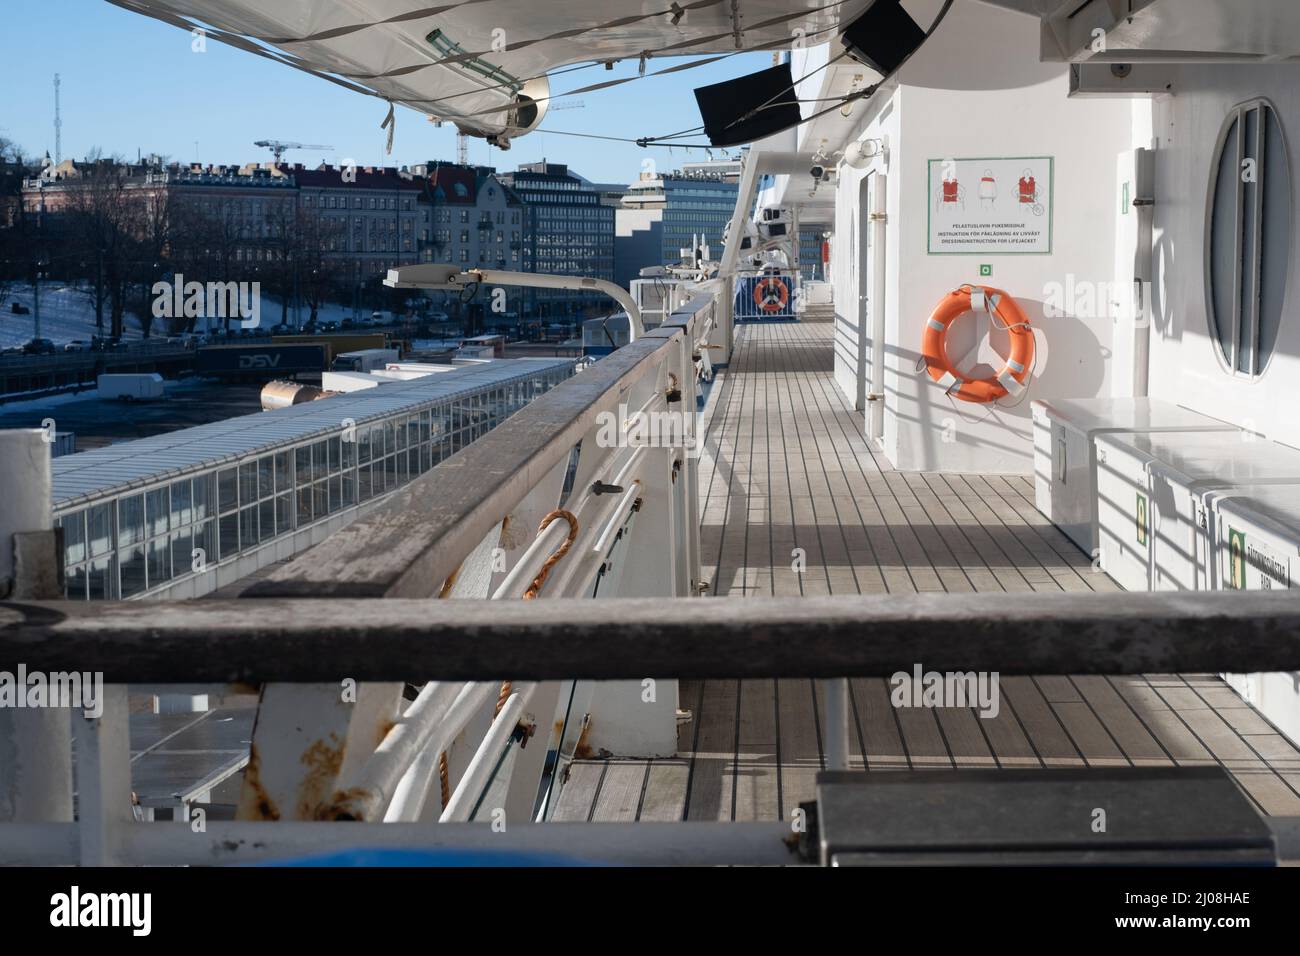 Helsinki / Finland - MARCH 14, 2022: Closeup of a liferaft of a large passenger ferry. An outside walking promenade of a cruise ship. Stock Photo